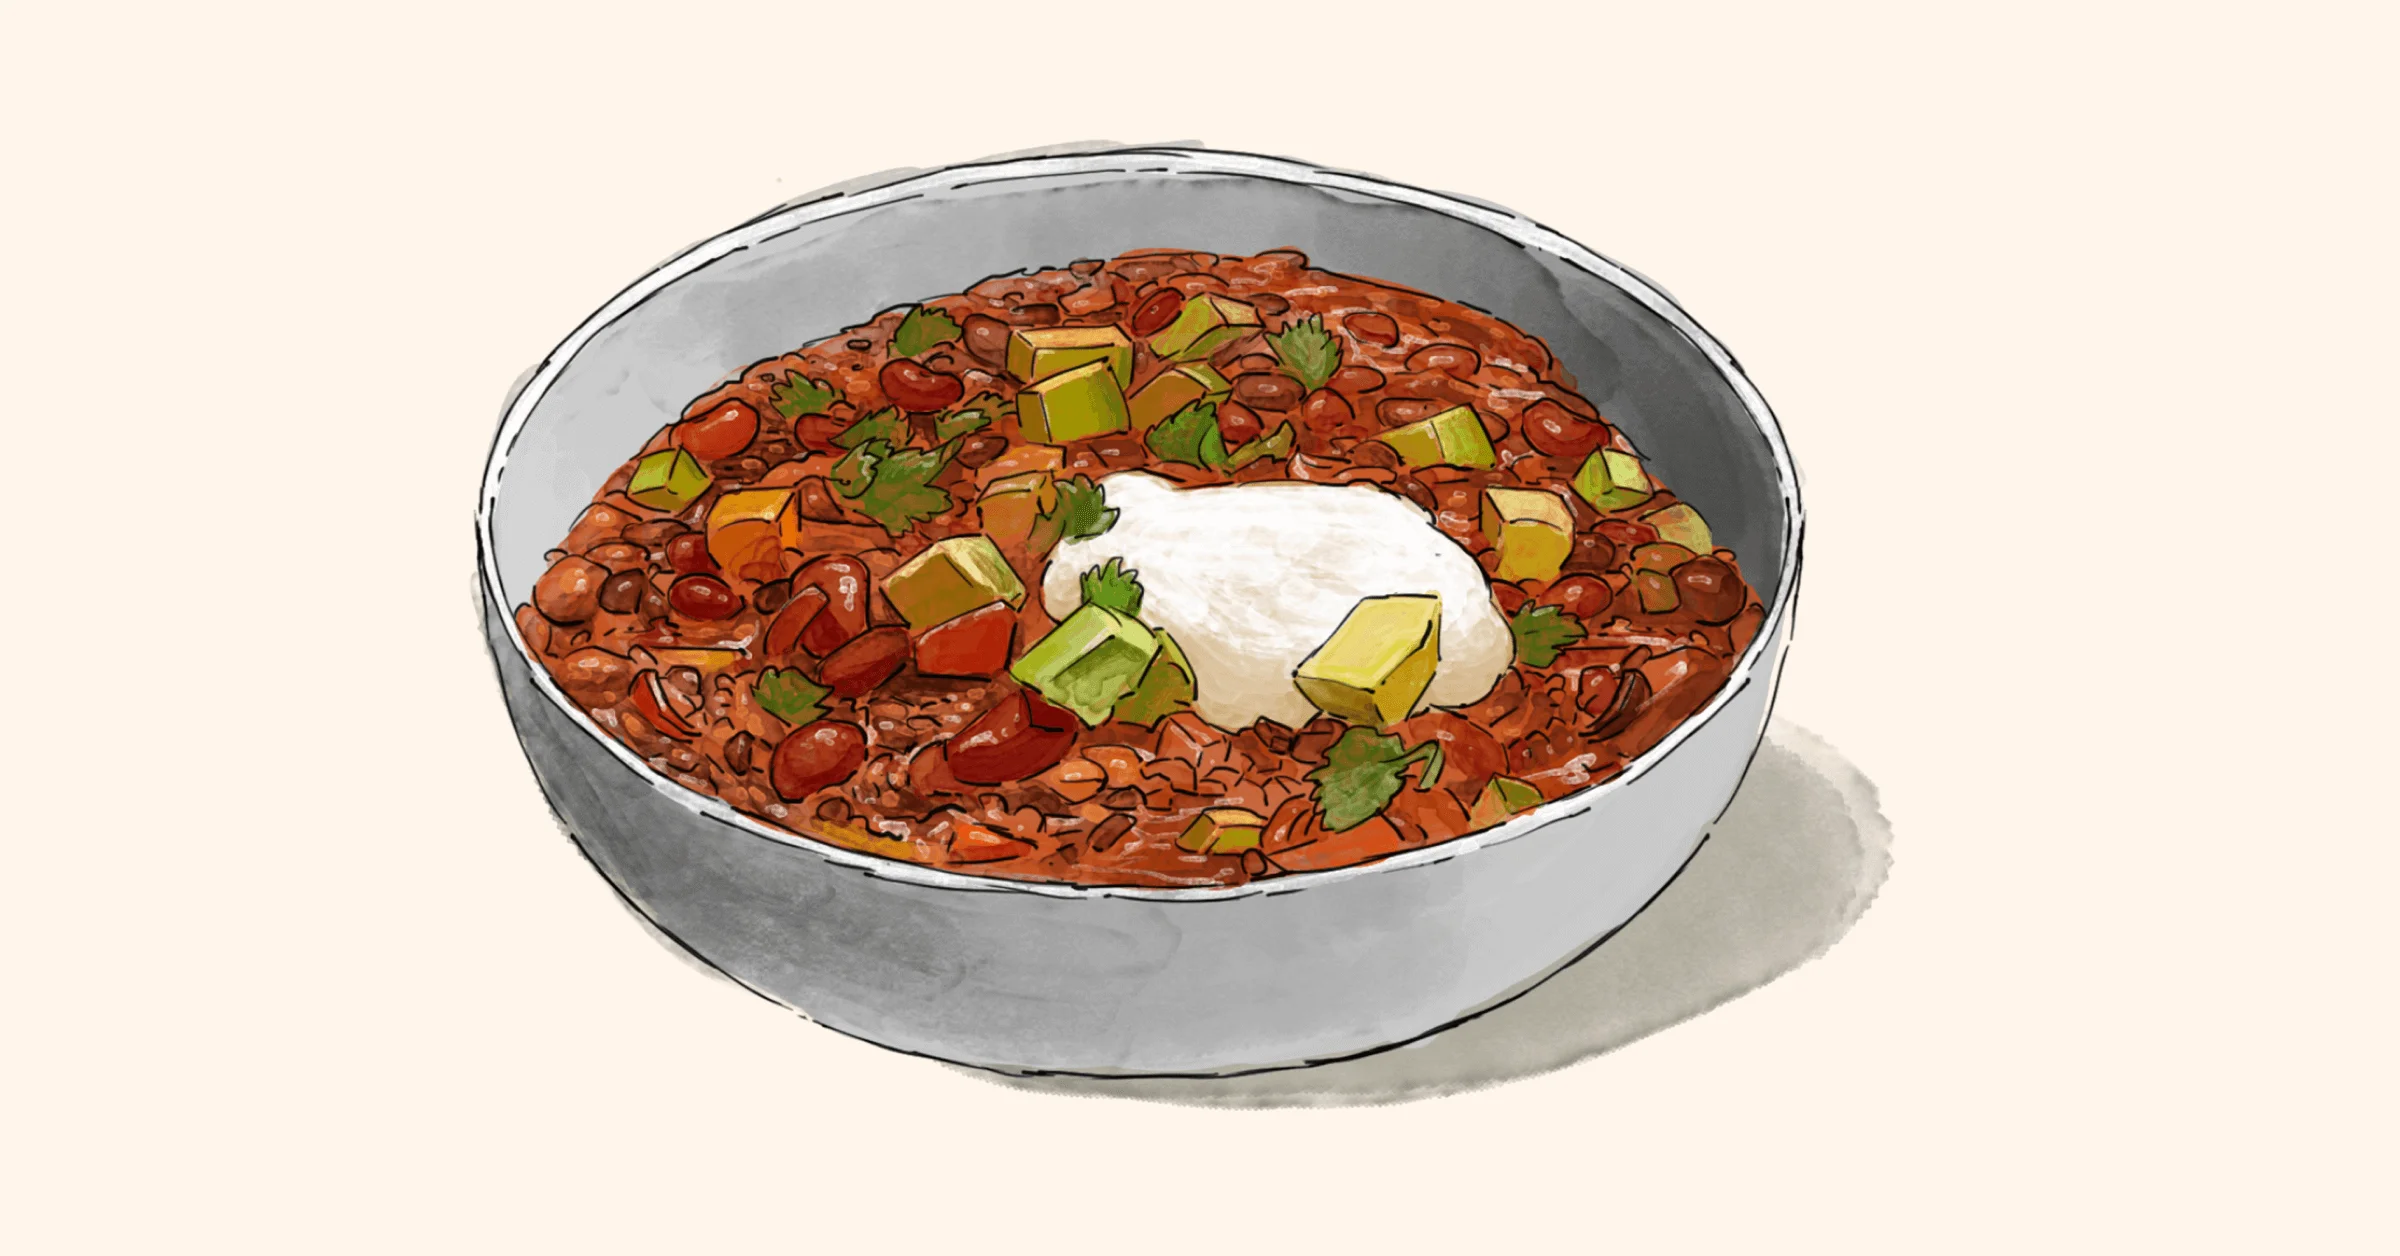 Illustration of Hippie’s Texan Vegan Chili